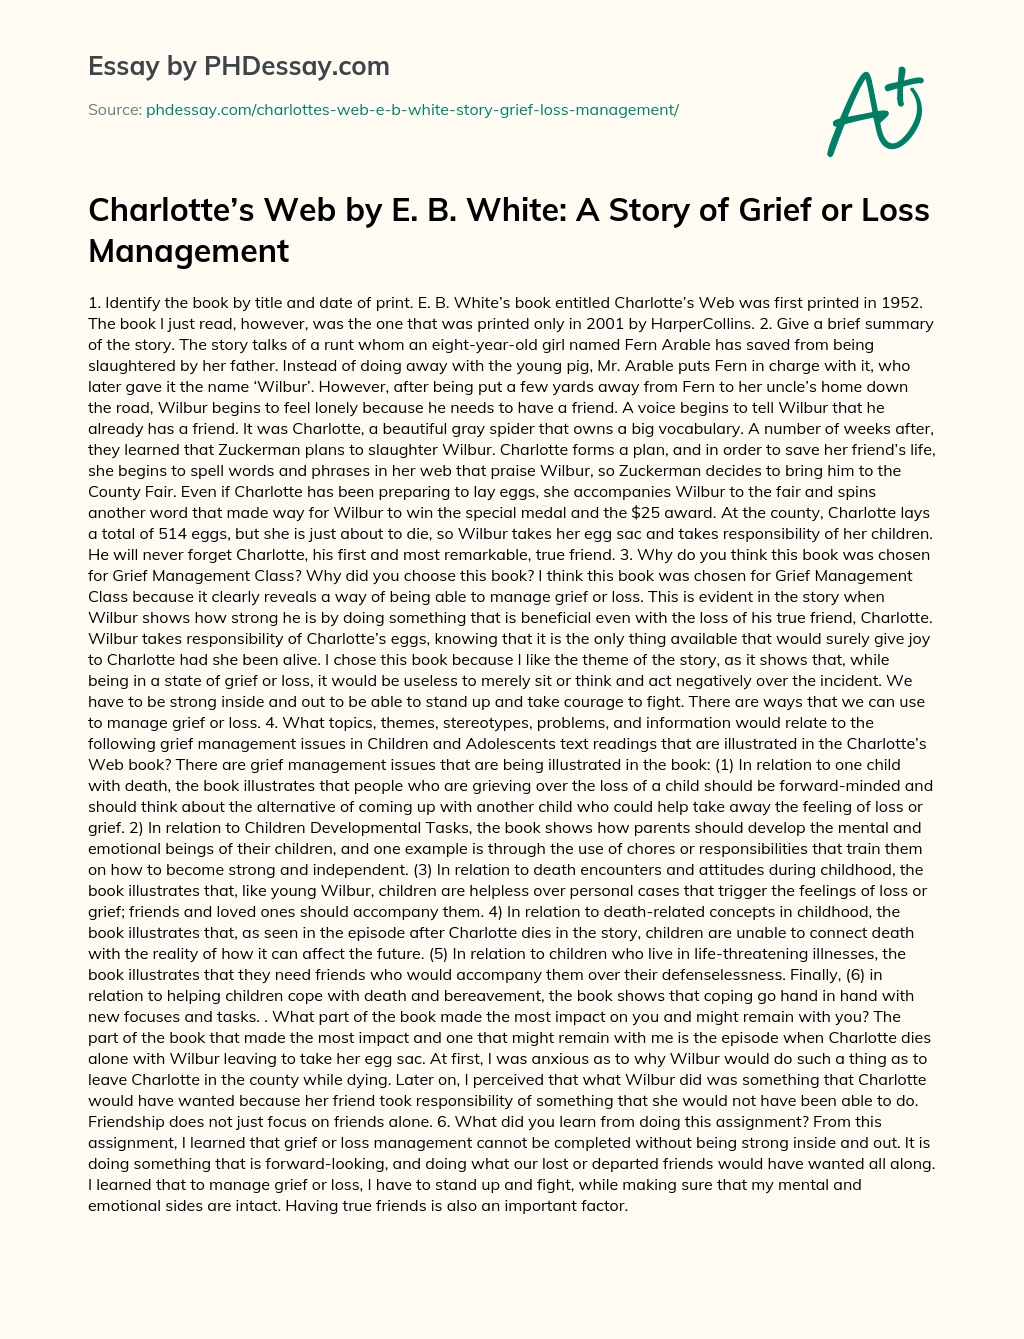 Charlotte’s Web by E. B. White essay